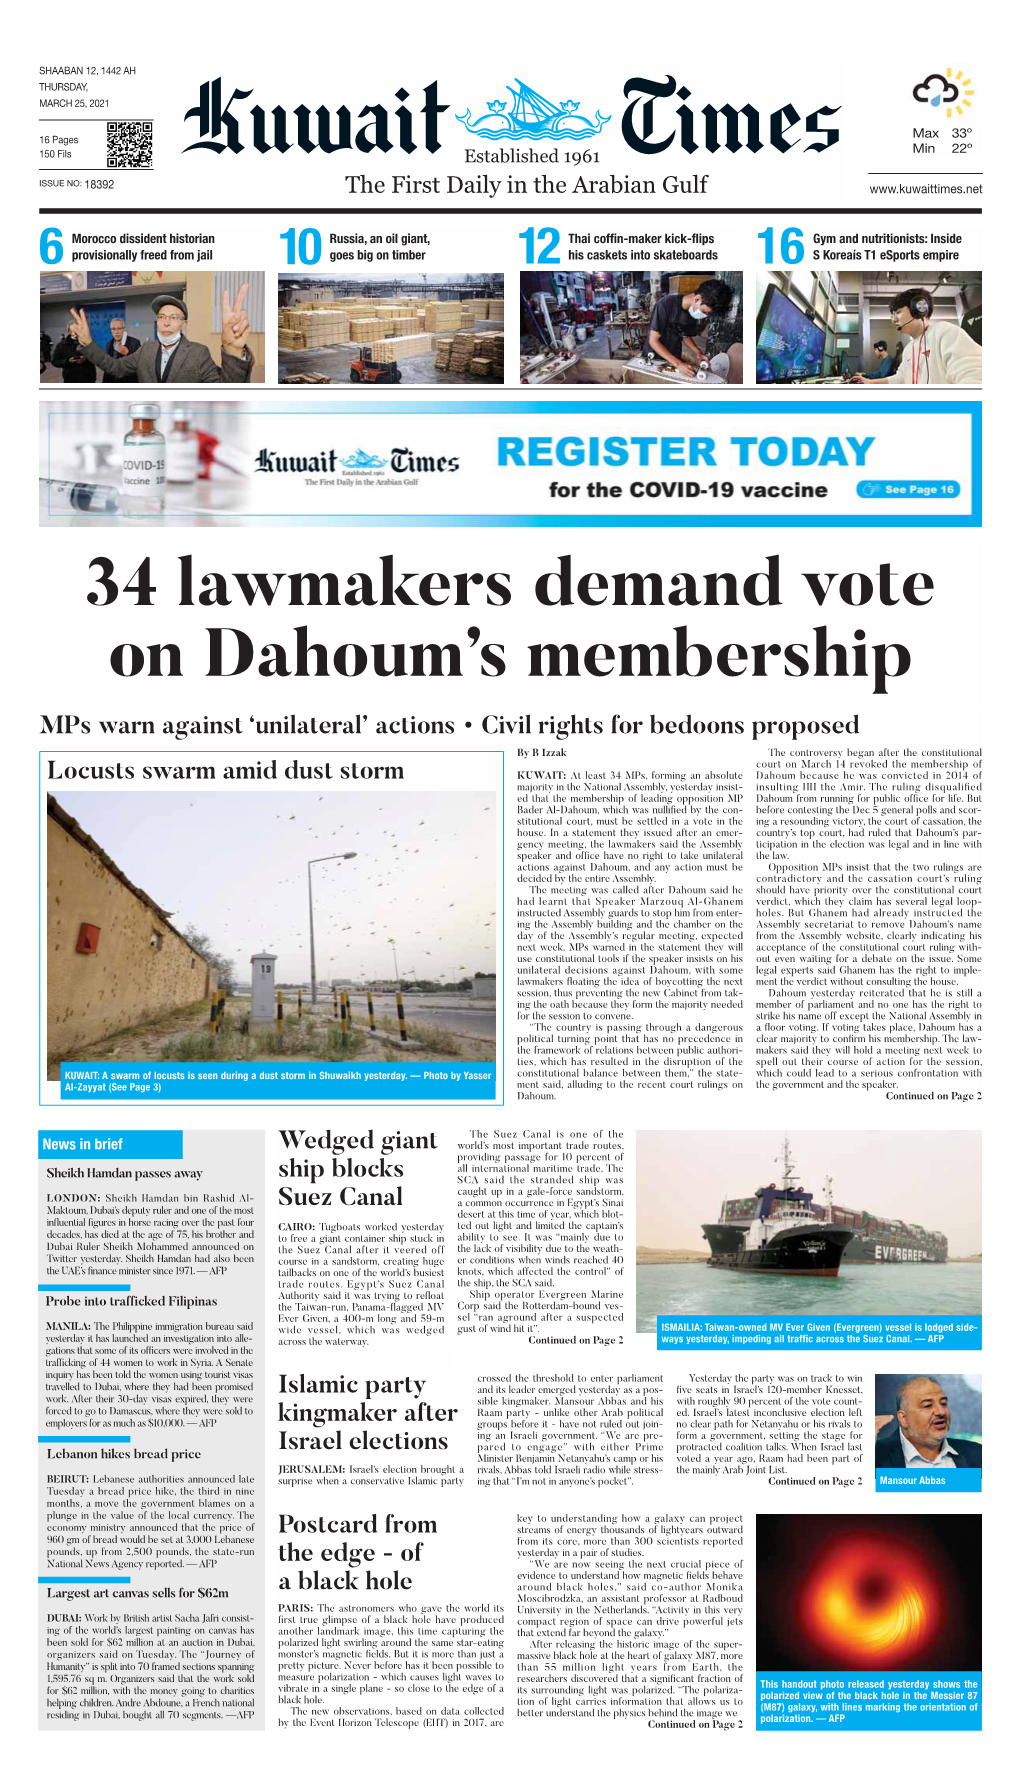 34 Lawmakers Demand Vote on Dahoum's Membership